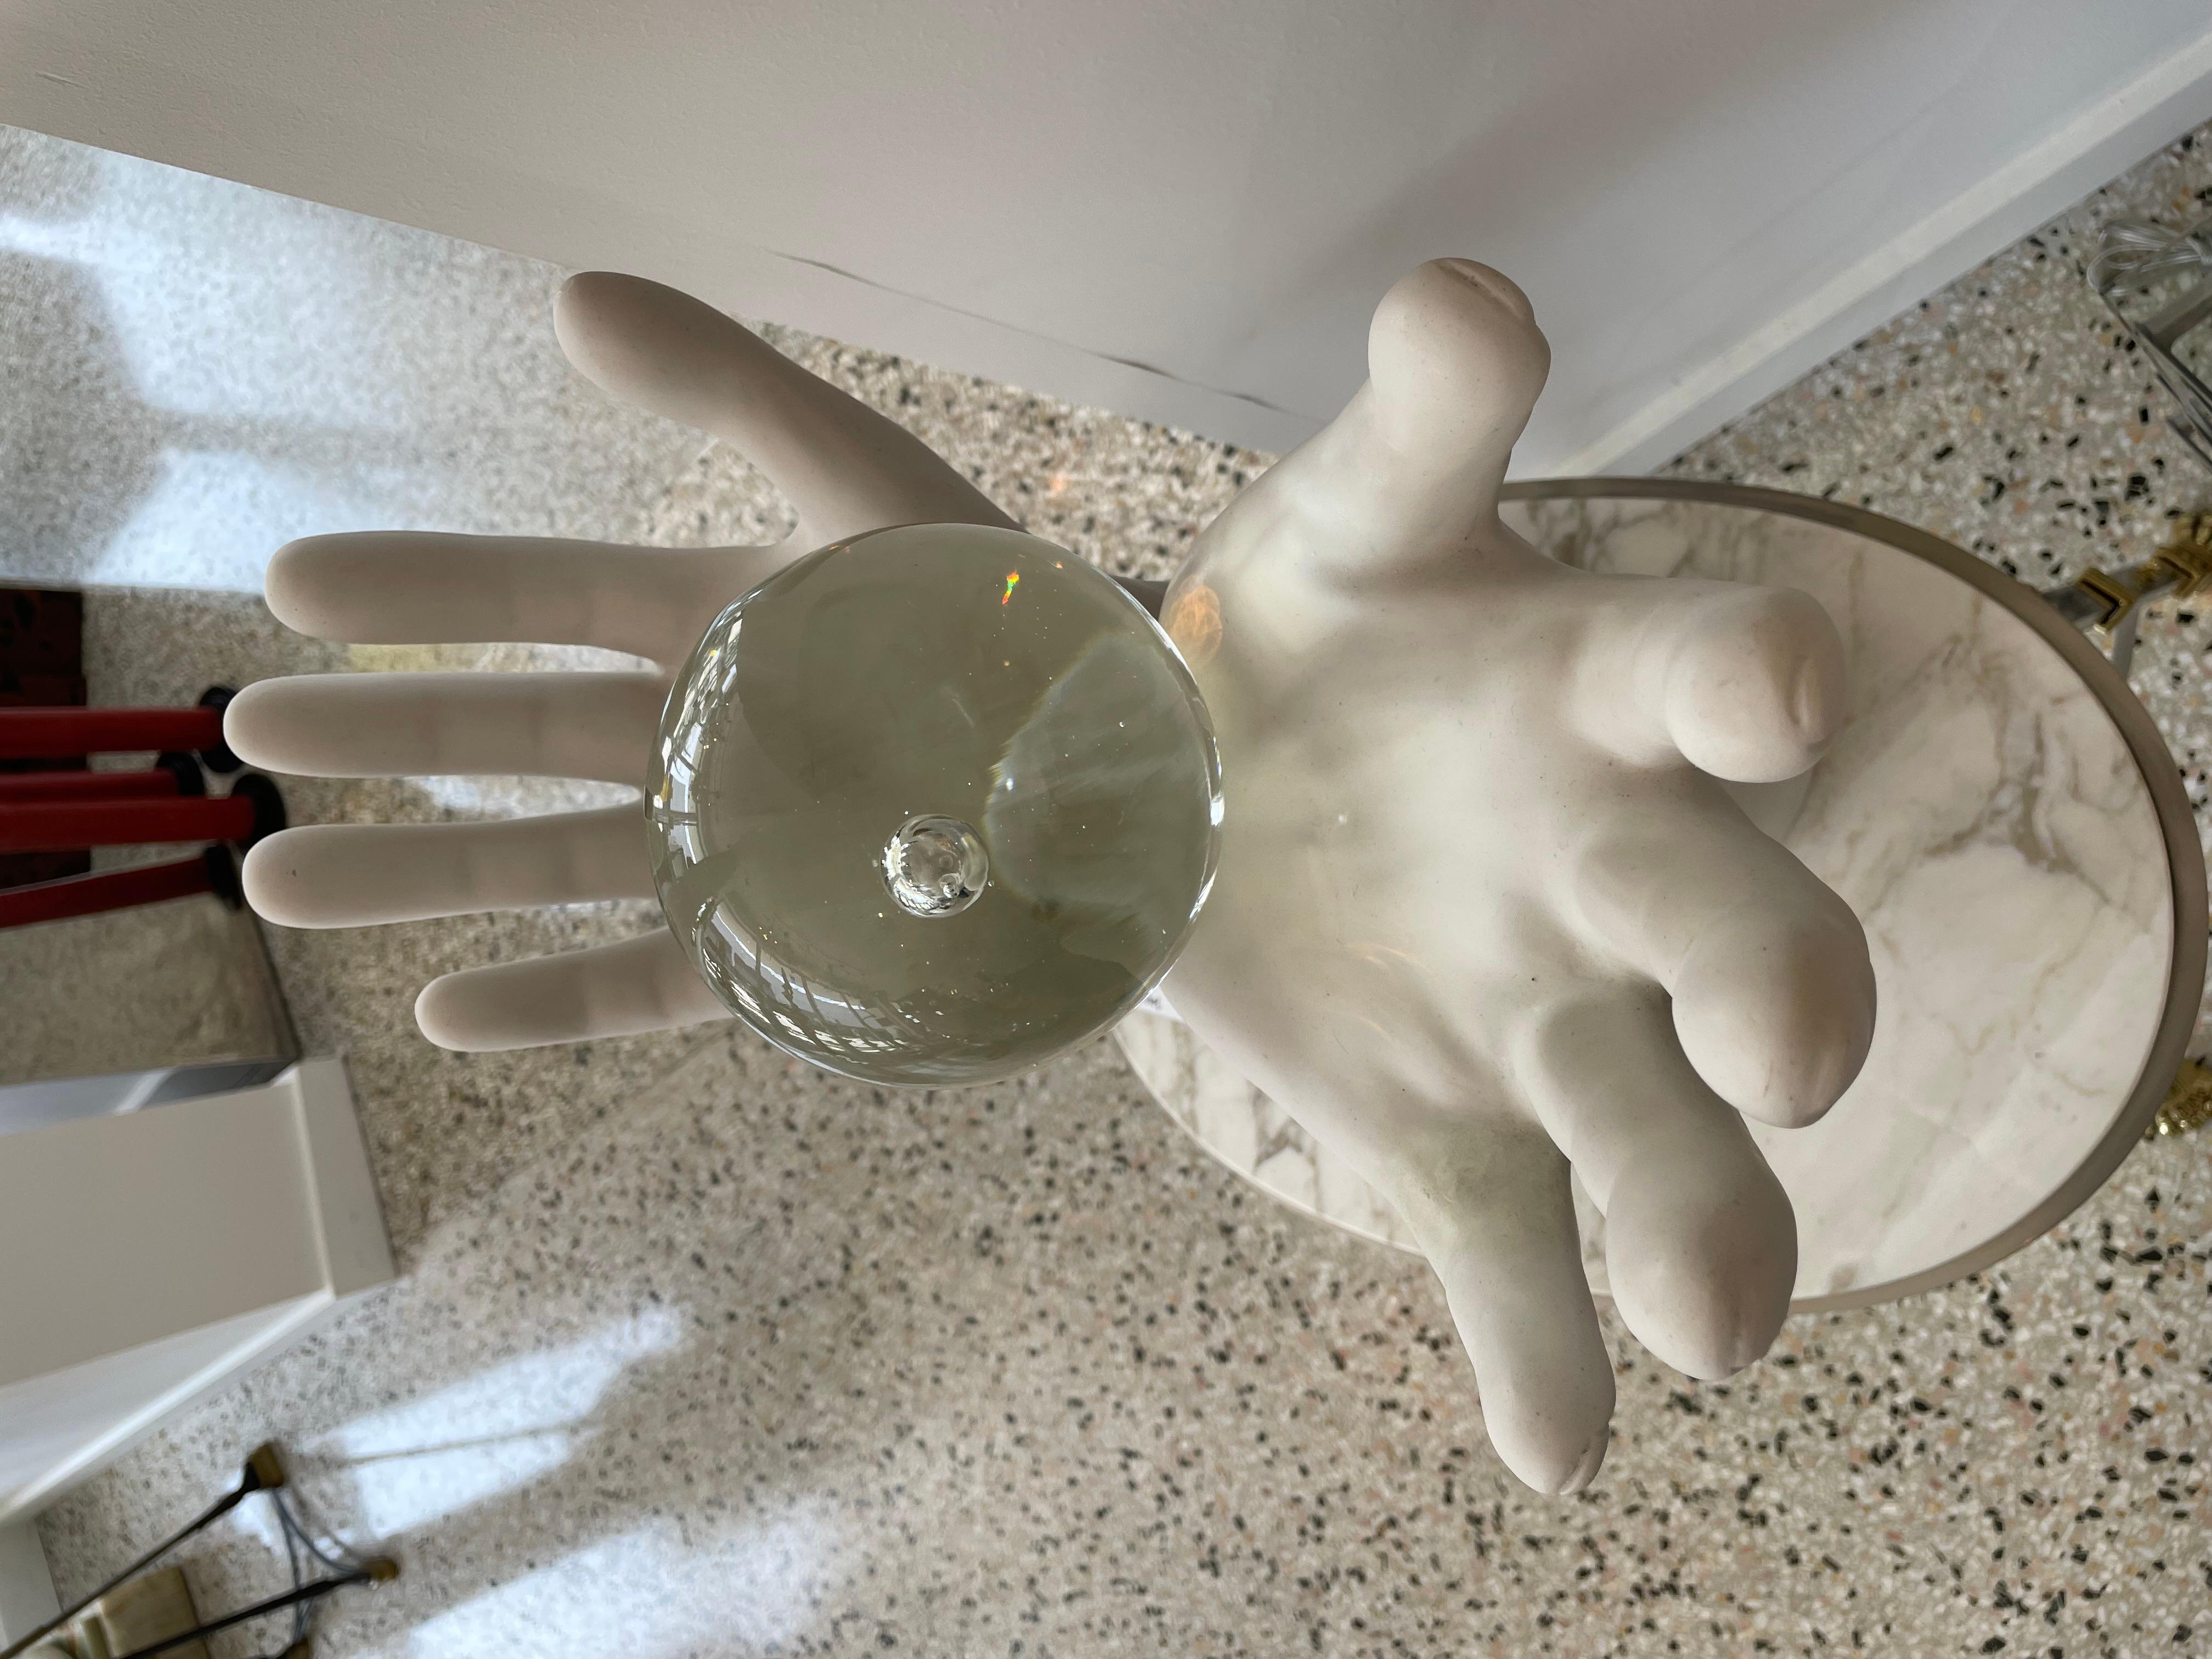 Hand-Crafted Figural Upturned Hands Sculpture Titled 